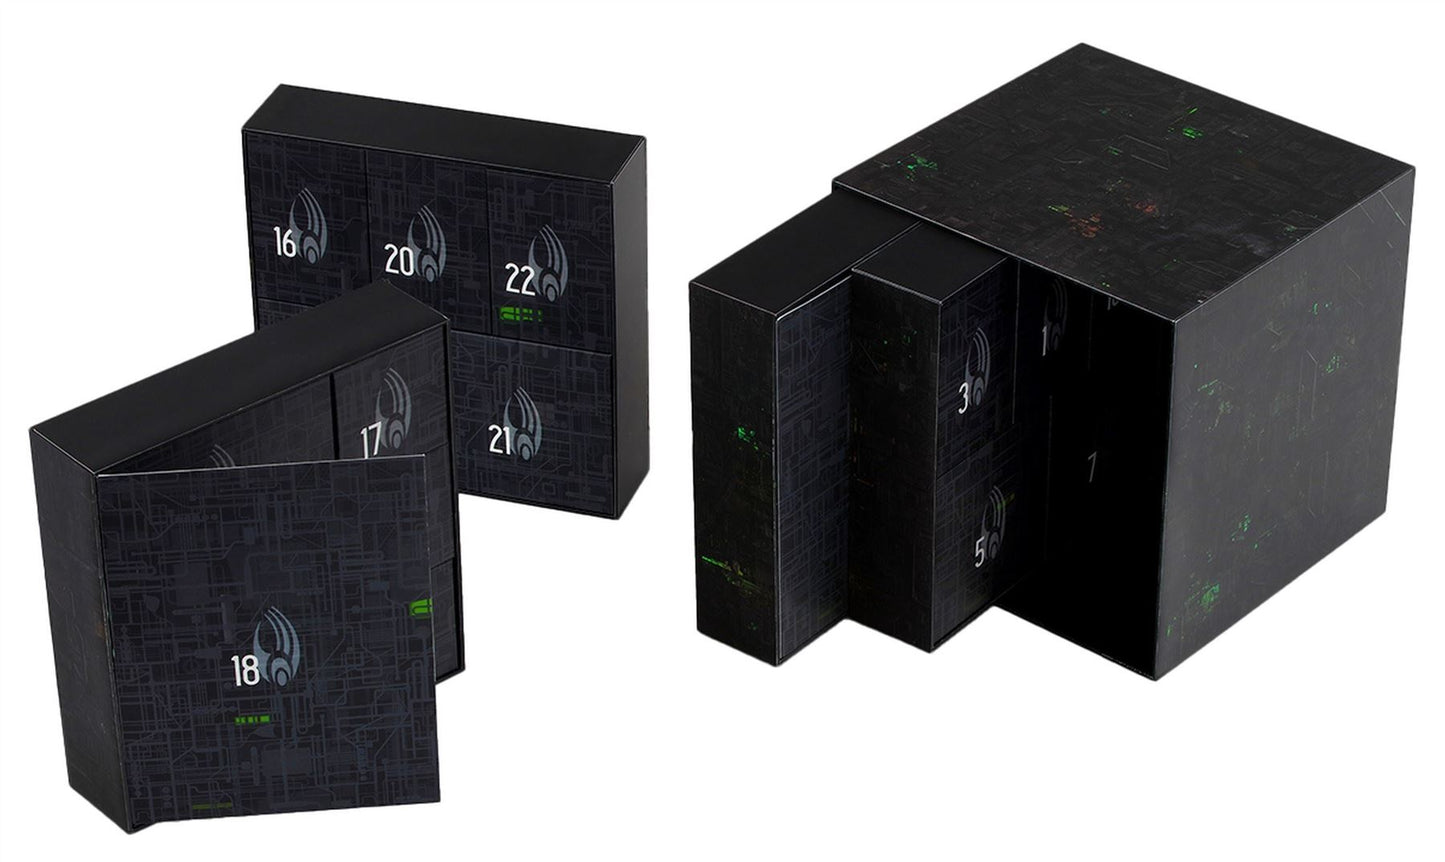 Eaglemoss STAR TREK Borg Cube Calendrier de l'Avent (STCAL001)